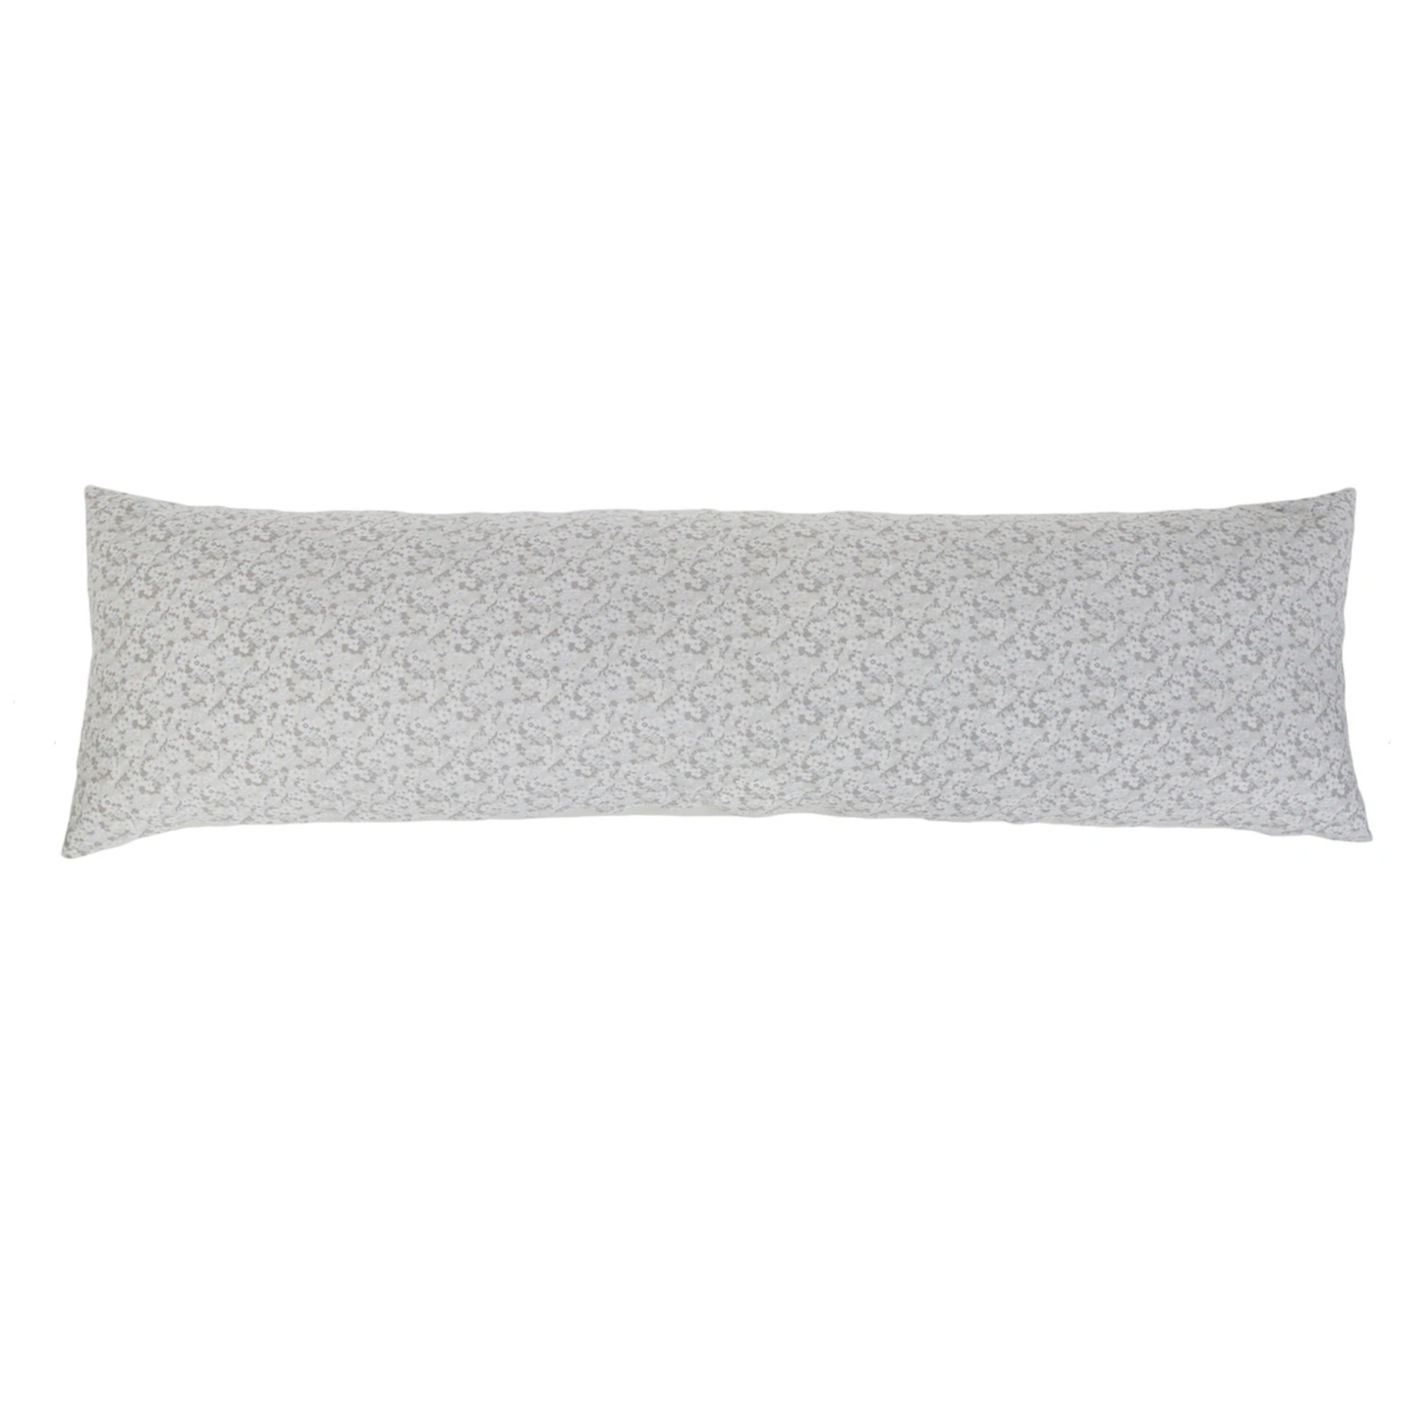 June Body Pillow, Ocean/Grey